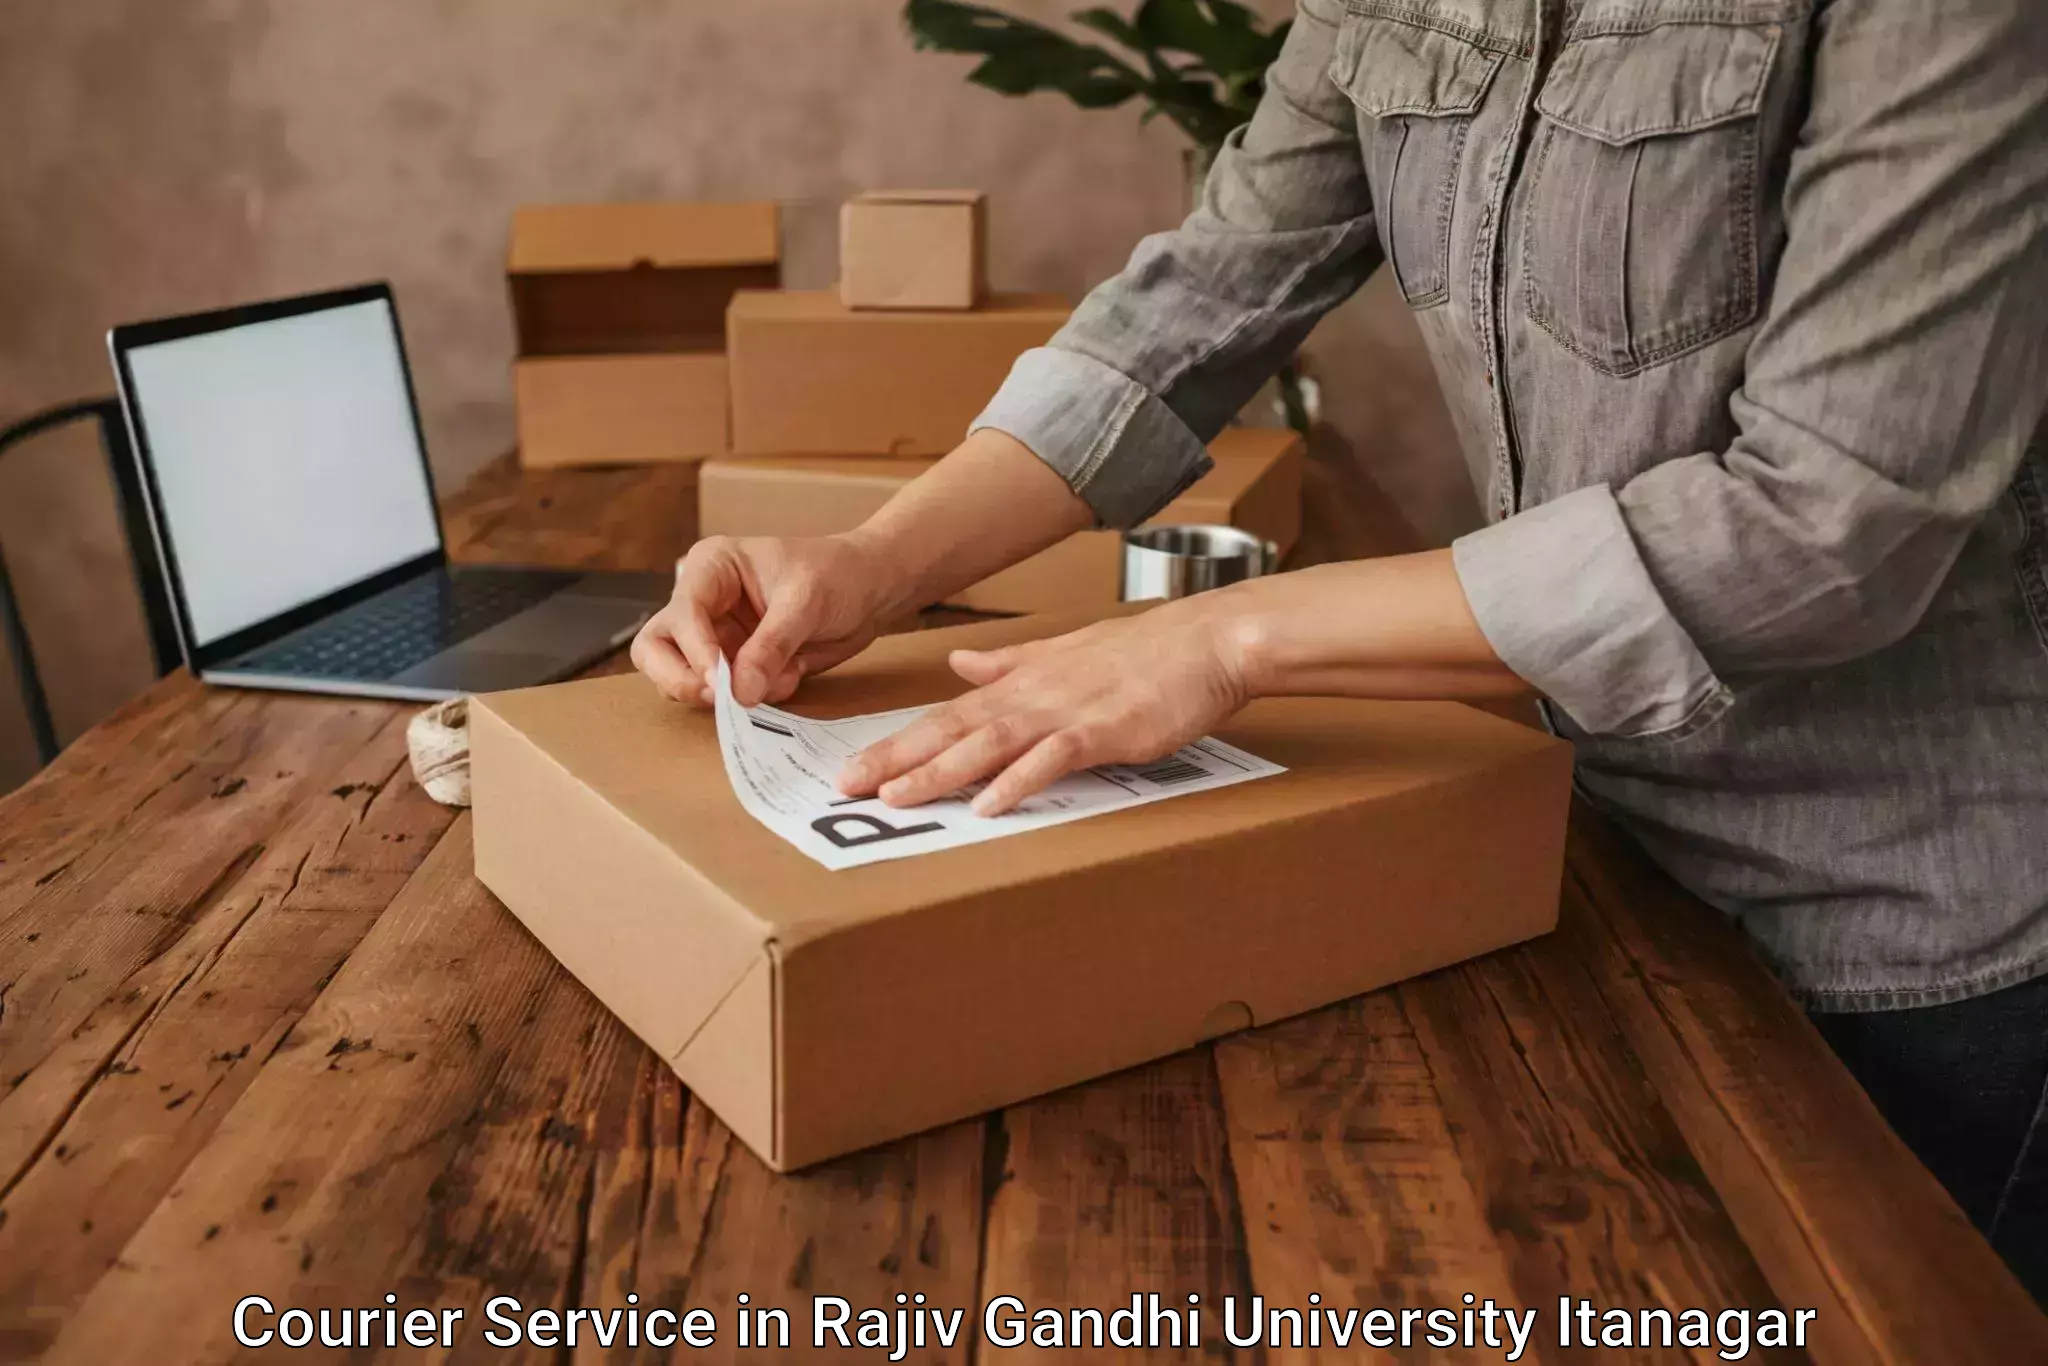 Express delivery capabilities in Rajiv Gandhi University Itanagar